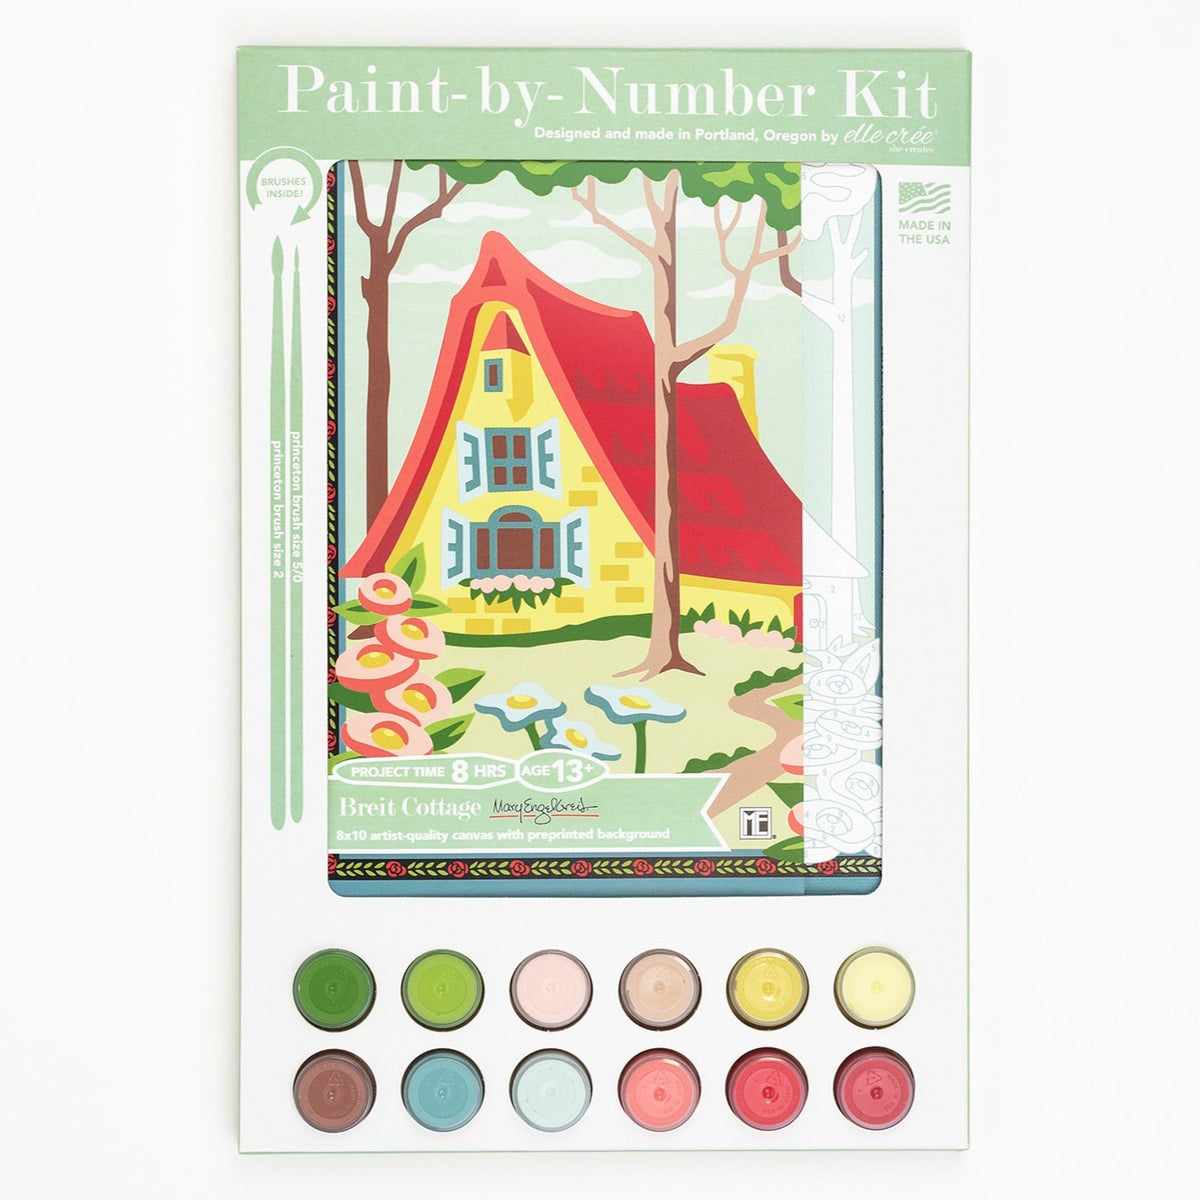 TO-GO Paint Kits! 8x10 Canvas - Fri, Mar 20 7PM at Elmhurst